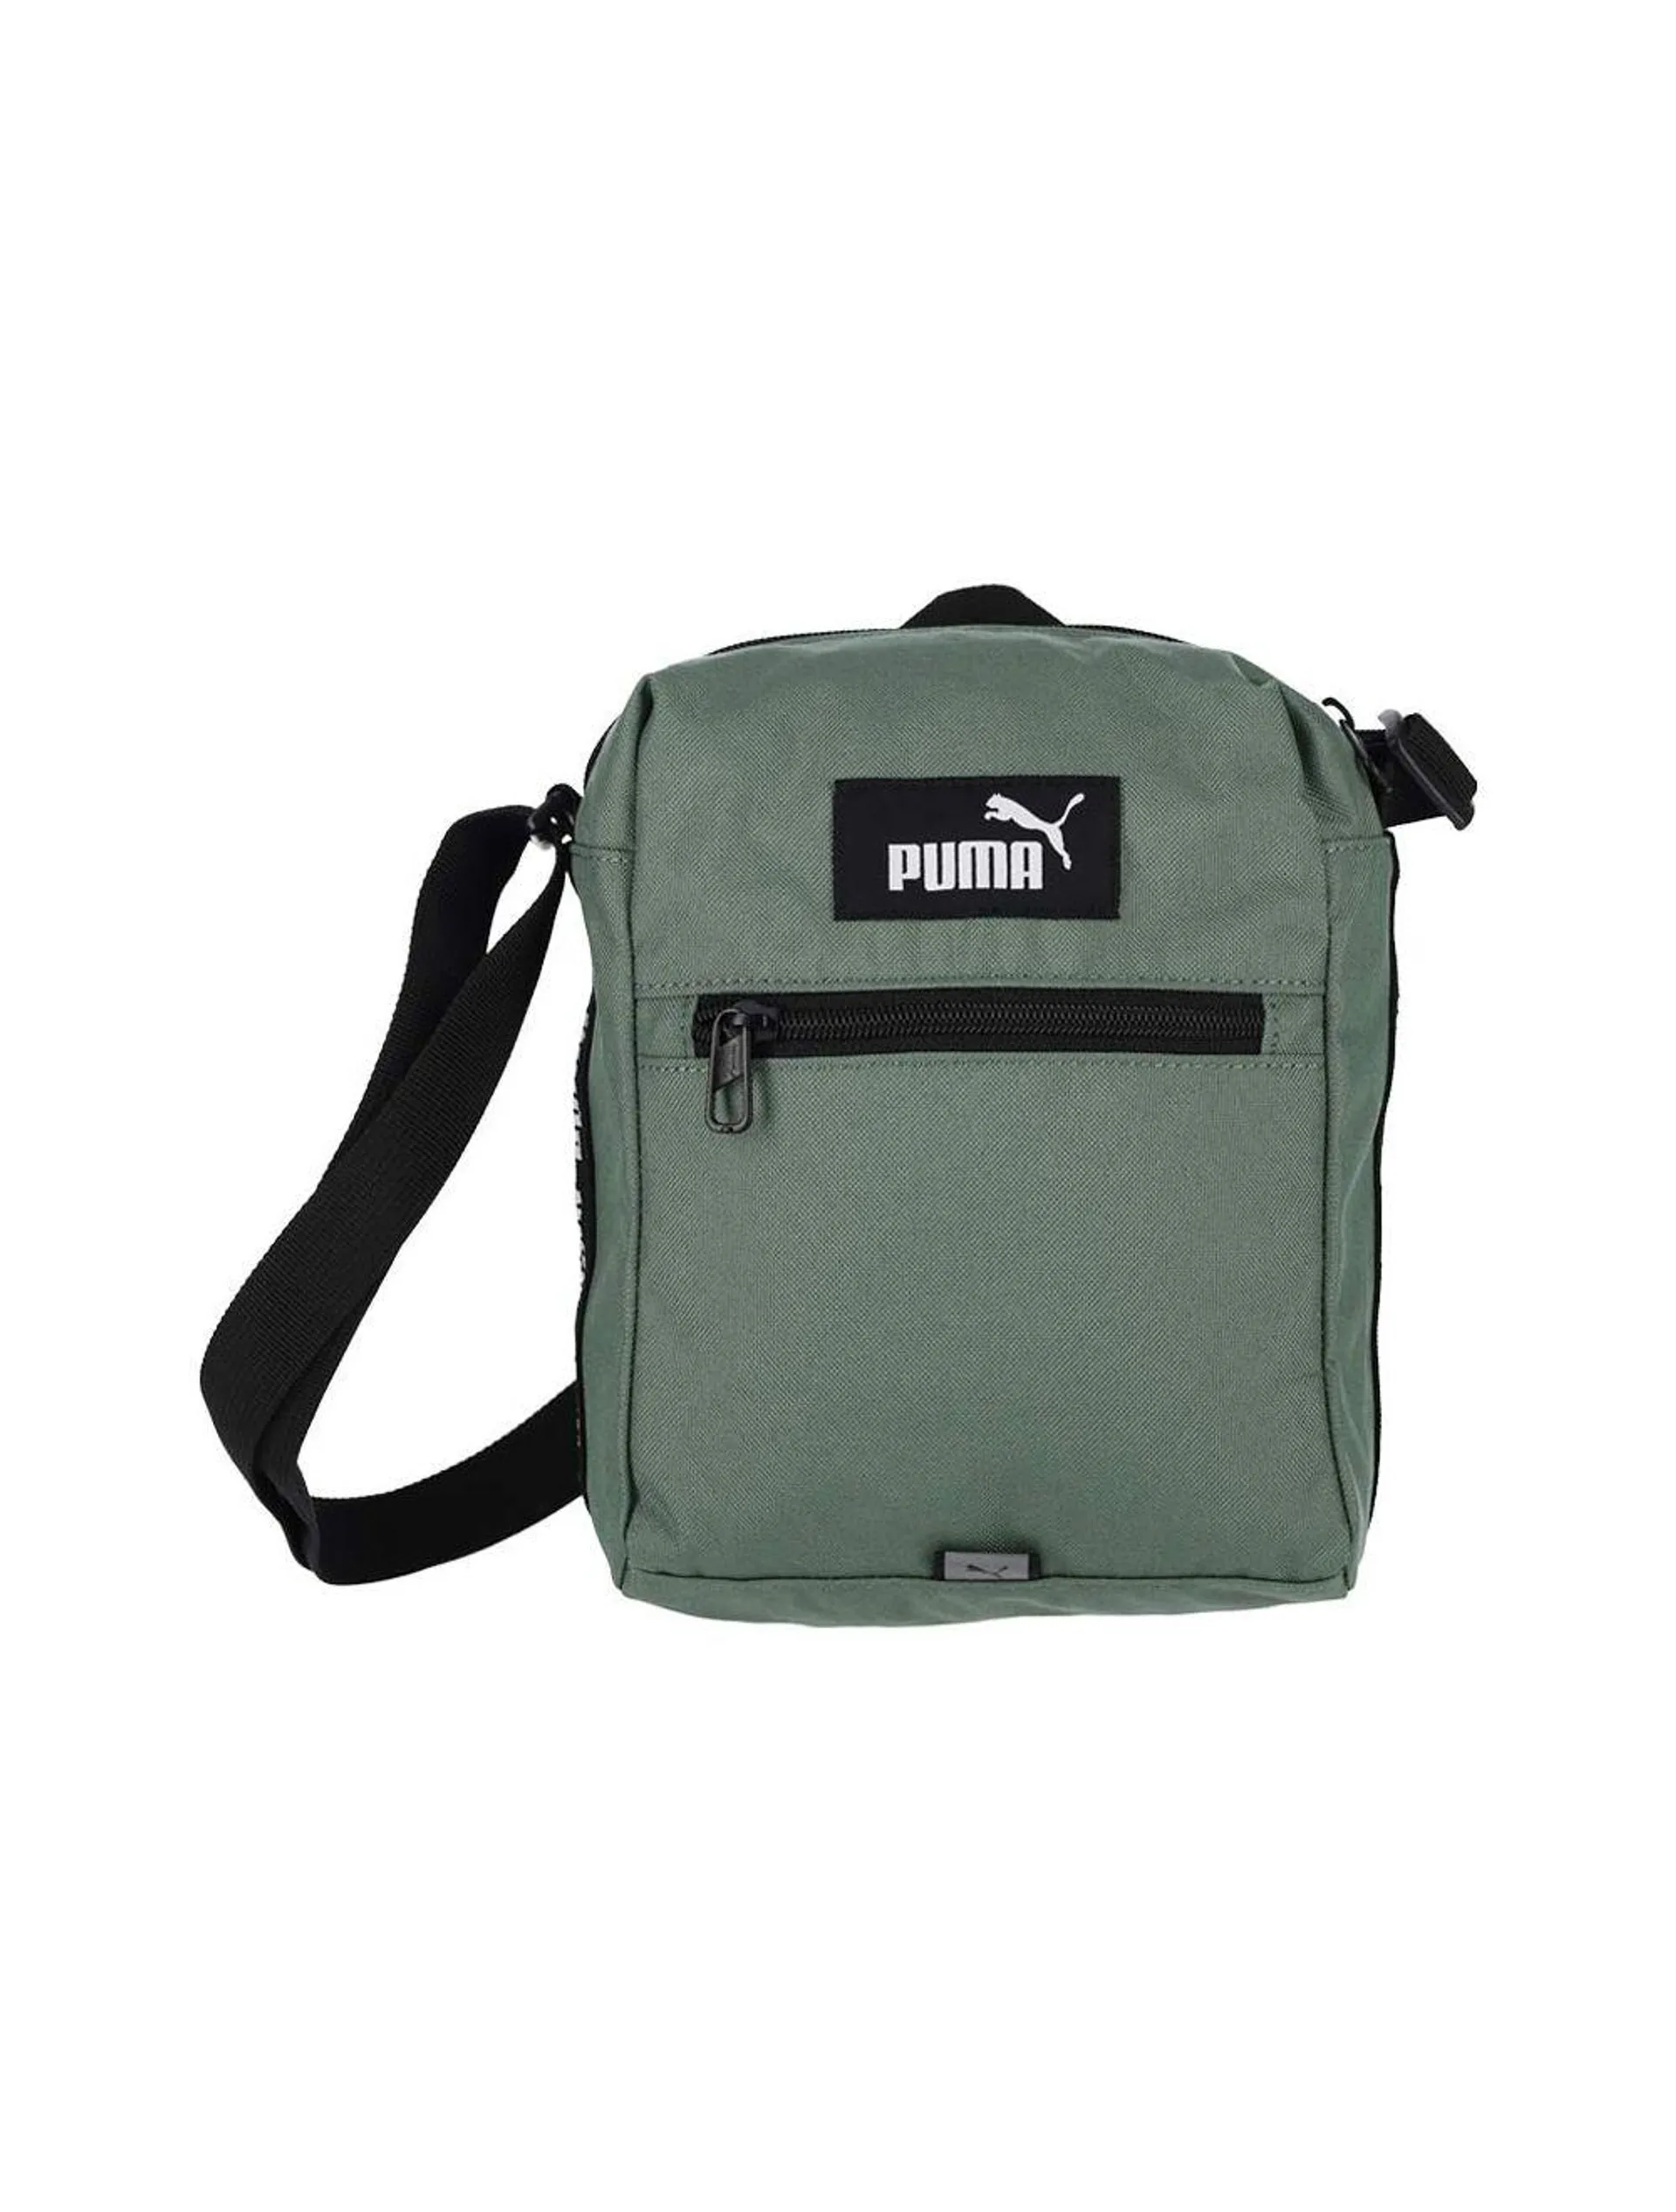 Puma Evoess Portable Bag Eucalptus/Green